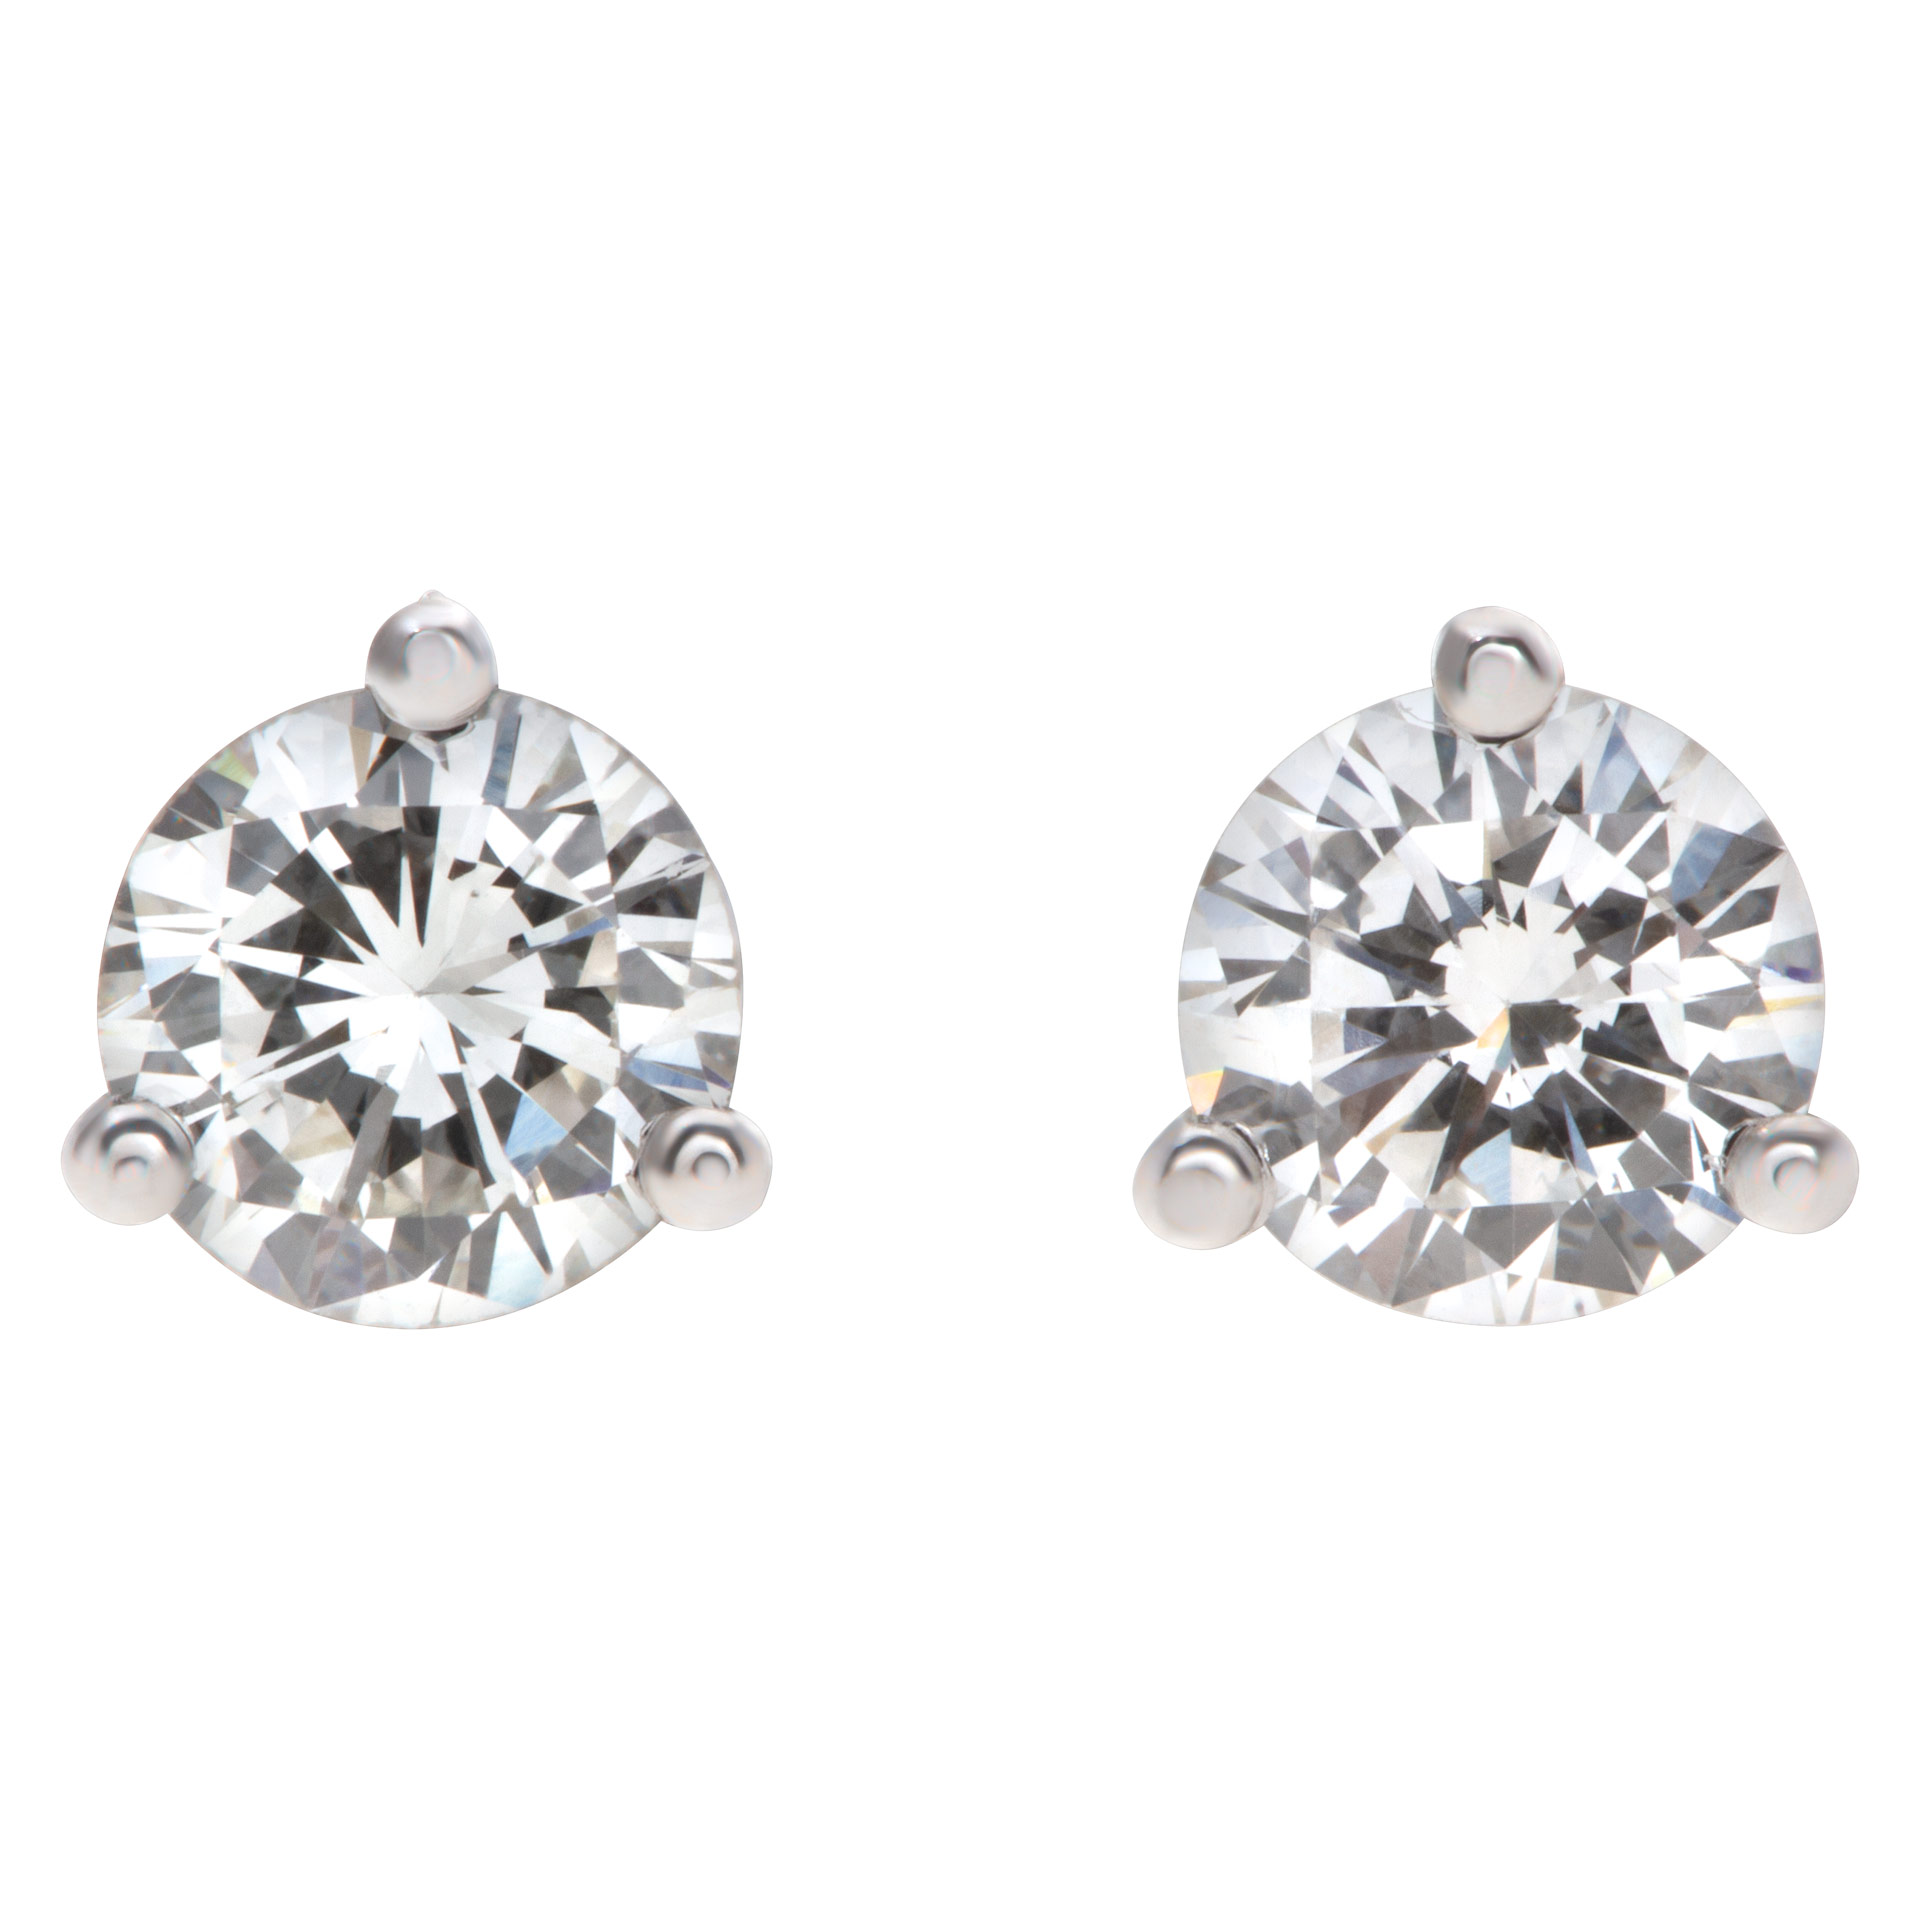 GIA diamond studs 0.33 carat (F color, VS2 clarity) and 0.33 carat (H color, VS2 clarity)